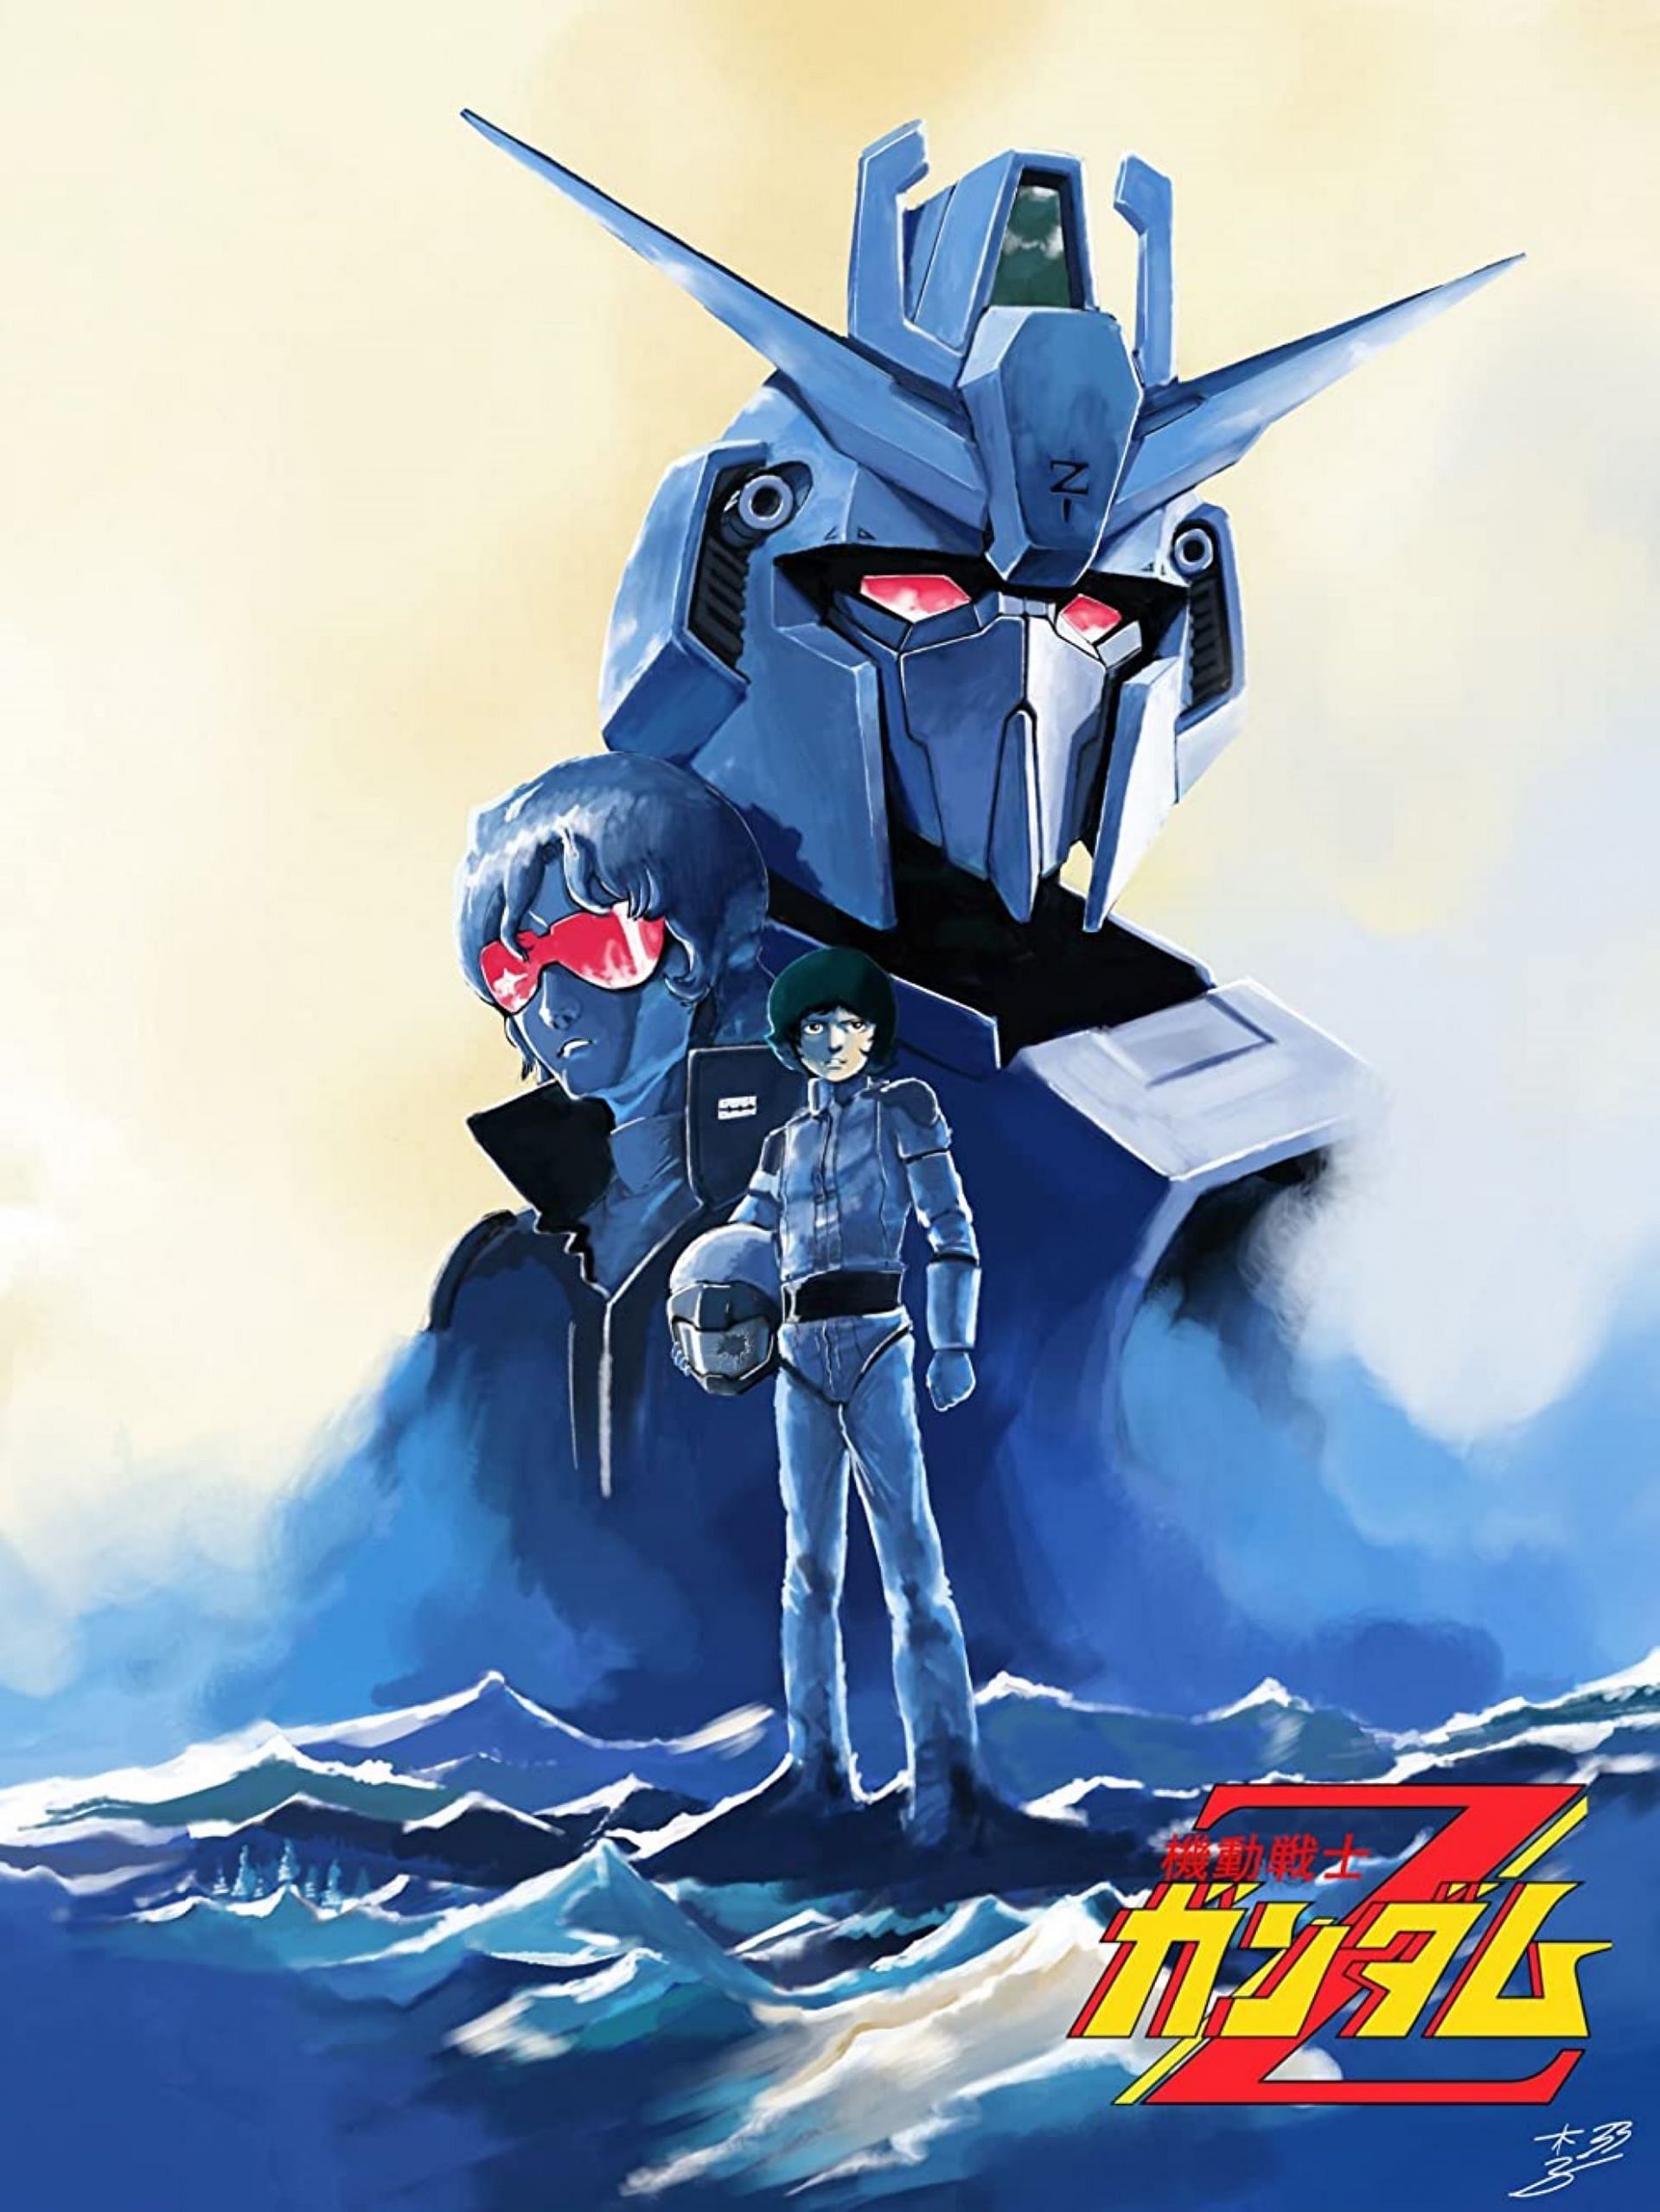 Original Mobile Suit Zeta Gundam promotional poster (Image via Bandai Namco Filmworks Inc.)